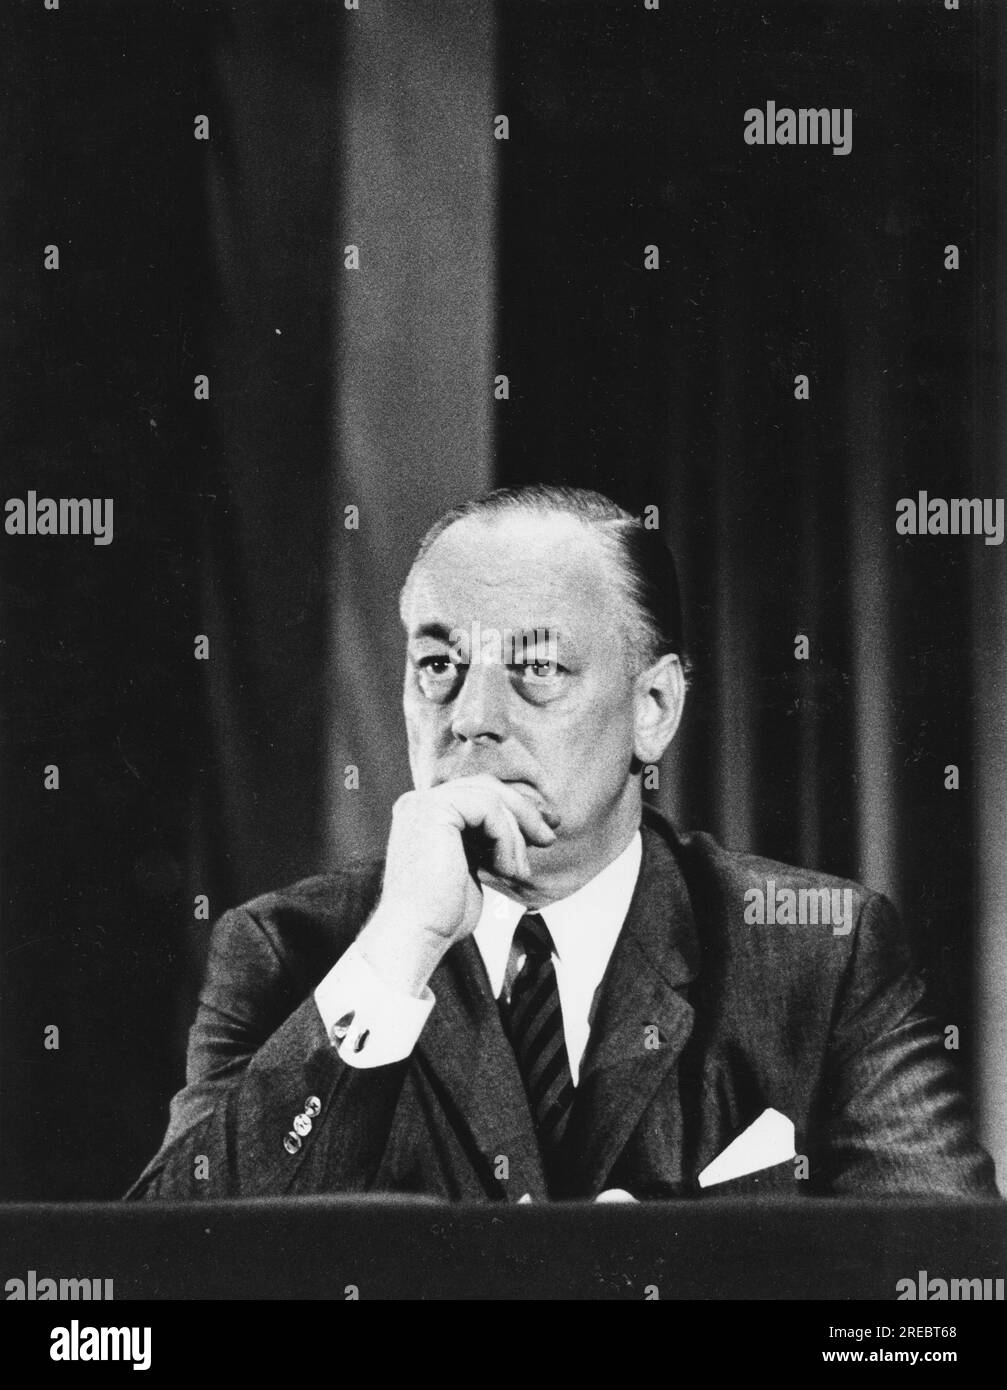 Thadden, Adolf von, 7.7.1921 -, politicien allemand (Parti national-démocrate d'Allemagne), rassemblement du parti, CLEARING-RIGHTS-INFO-NOT-AVAILABLE Banque D'Images